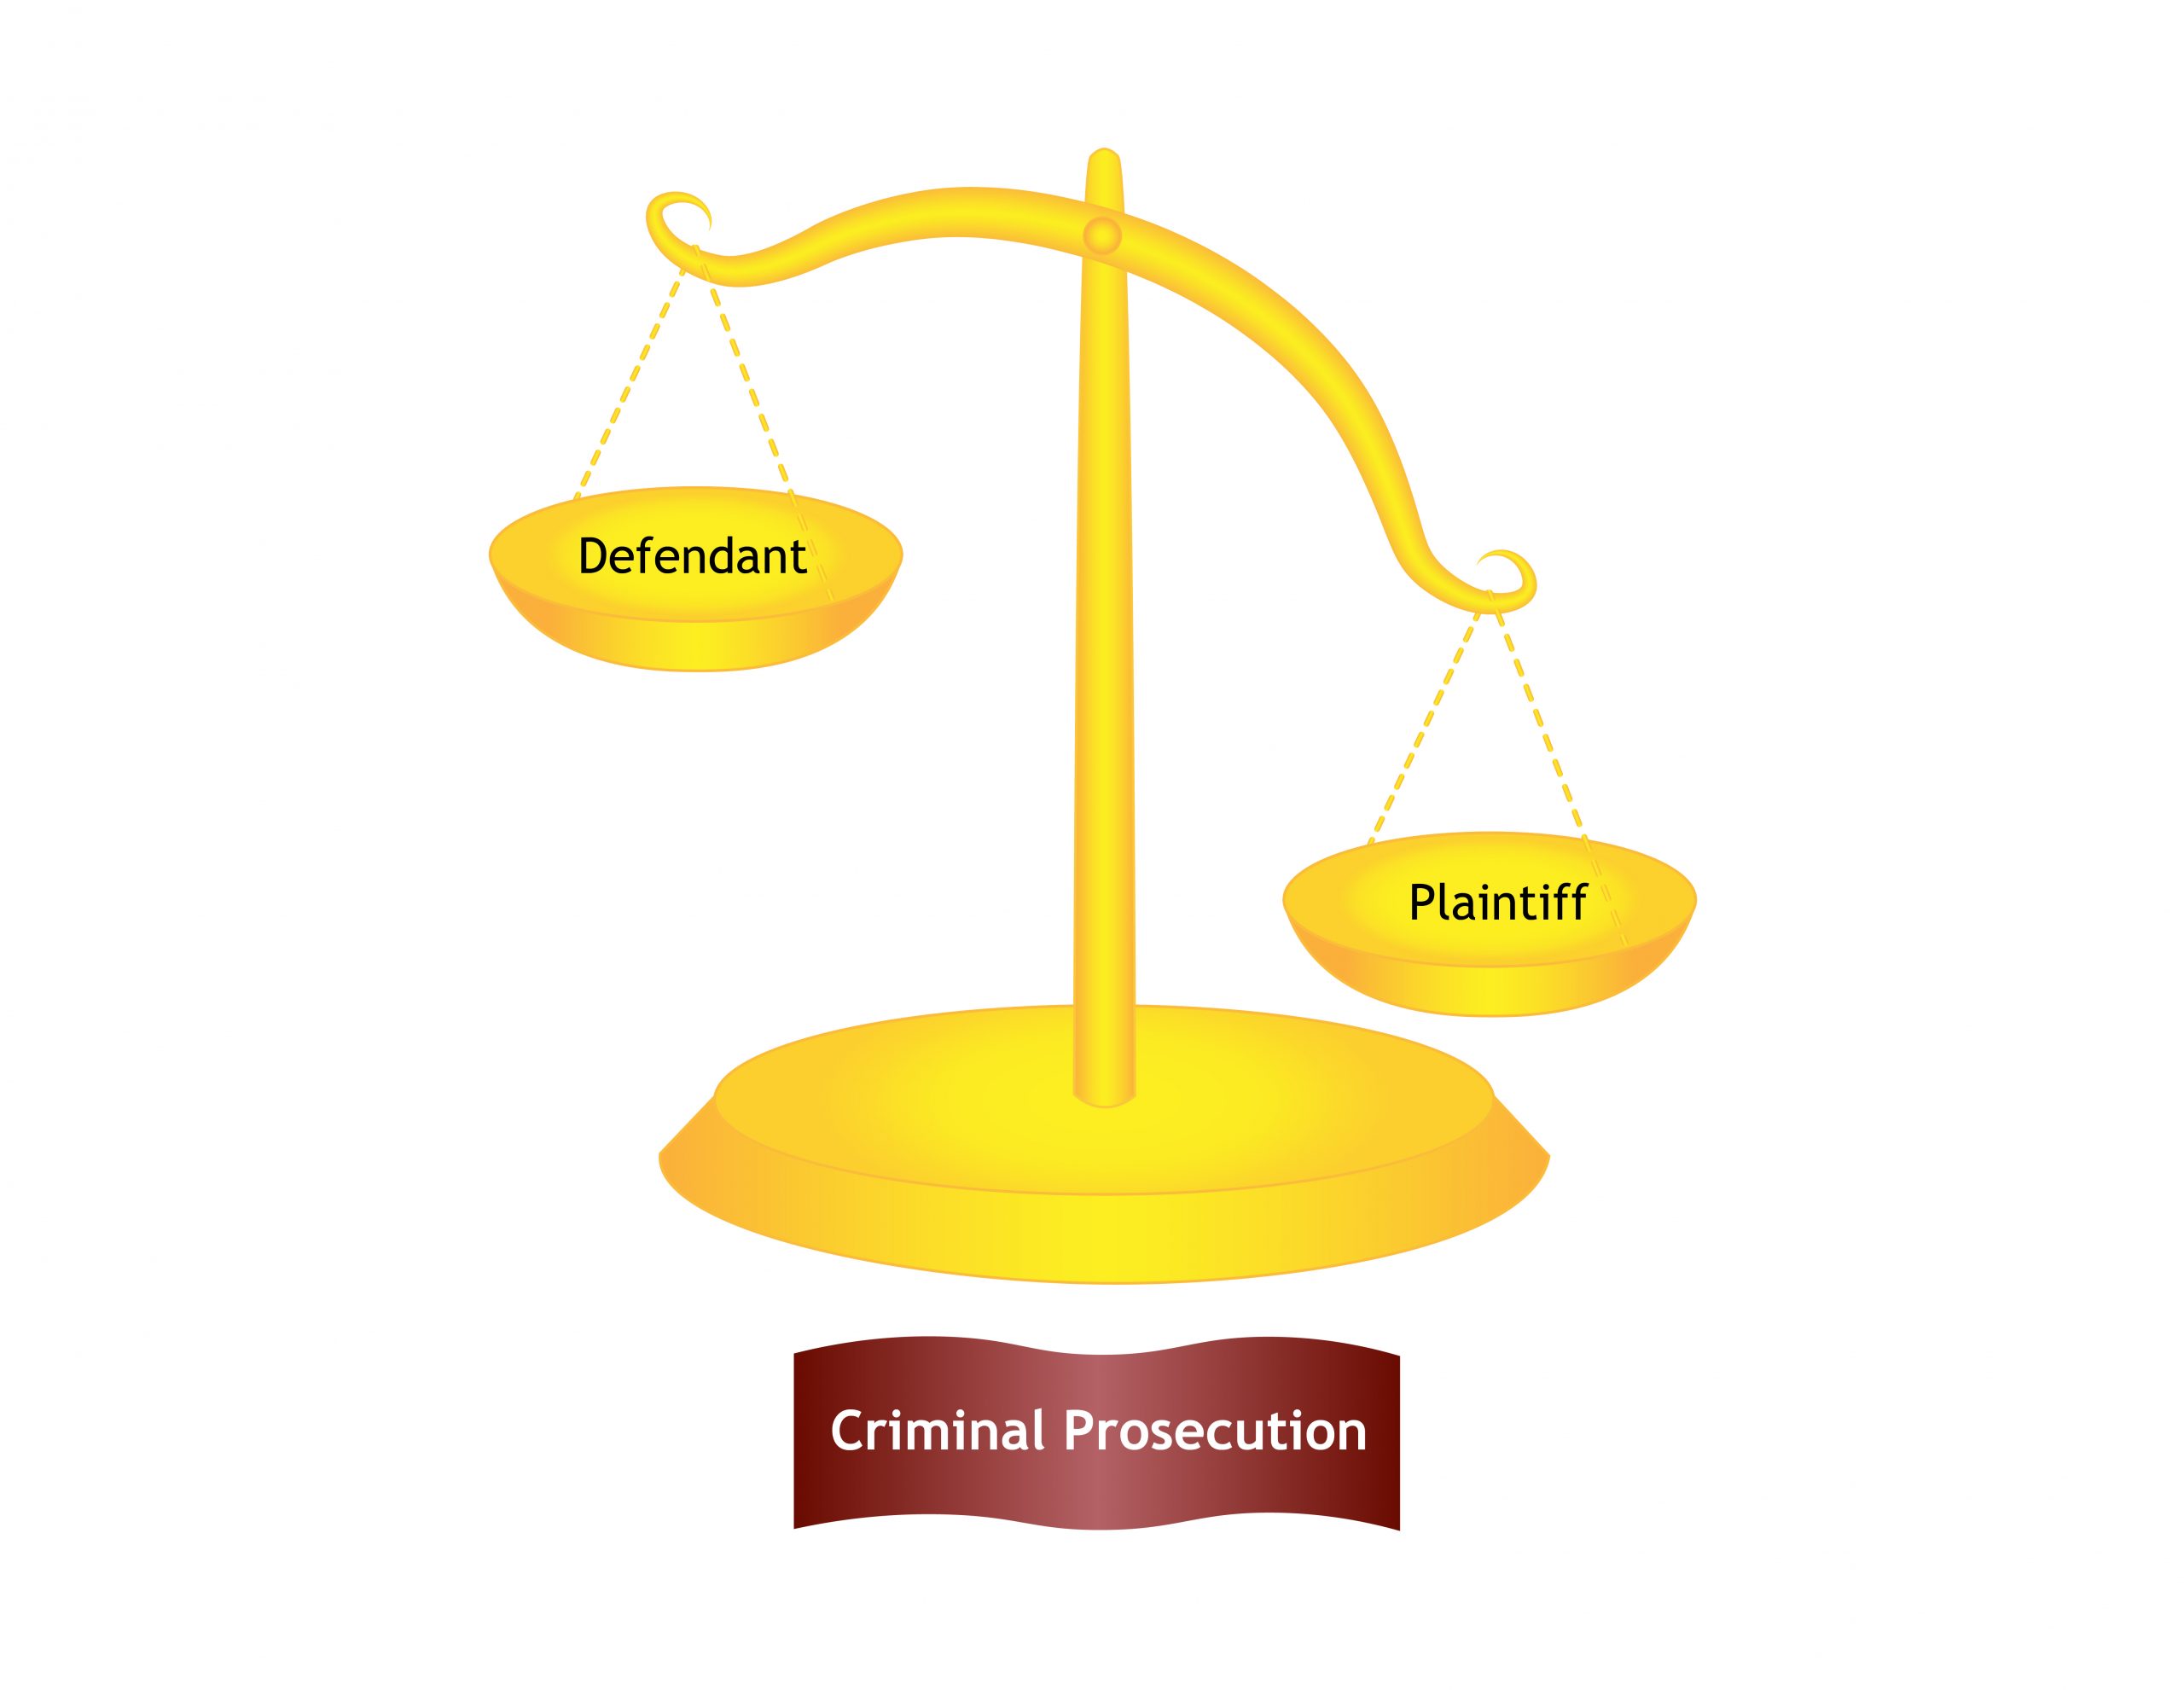 Image showing heavy burden of proof in criminal cases